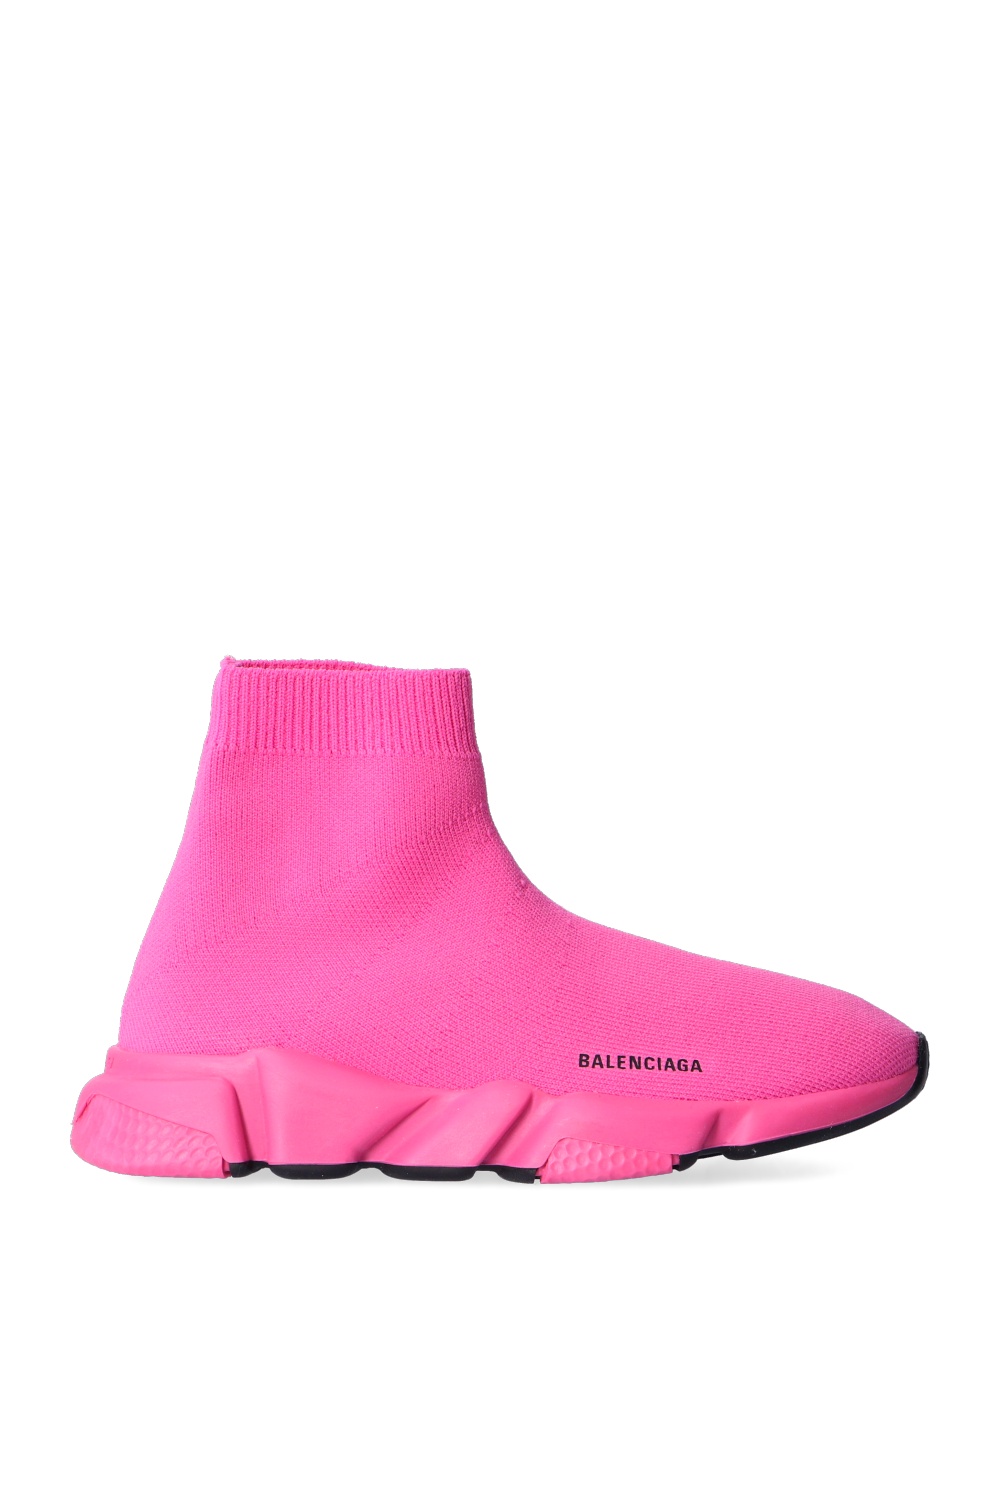 Balenciaga Sock Sneakers Pink Sale Online  benimk12tr 1688151687